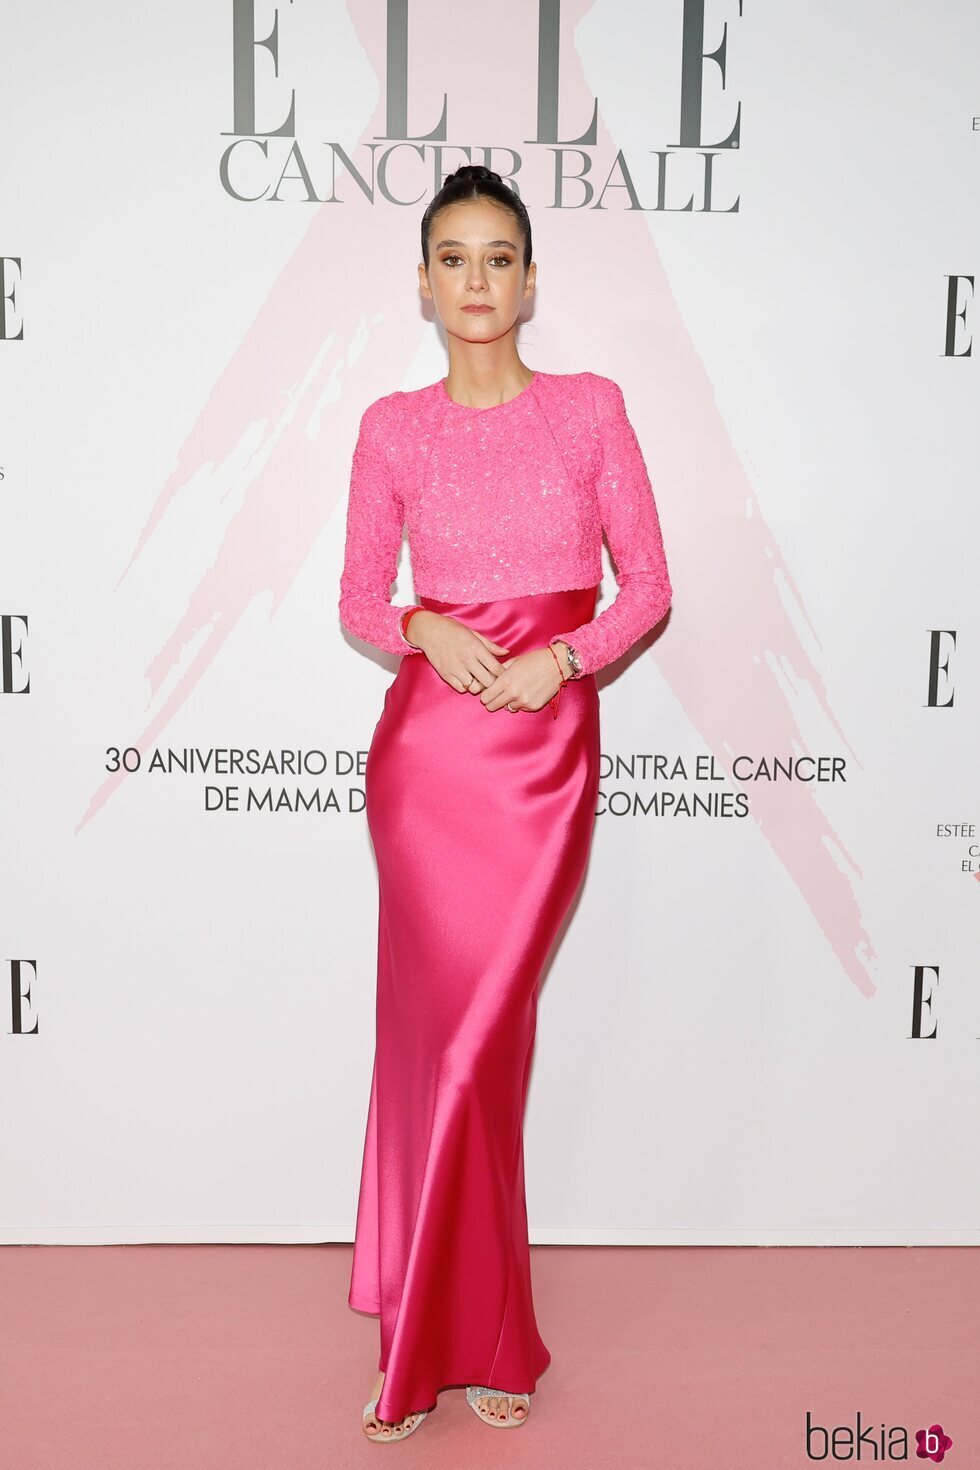 Victoria Federica acude a la gala solidaria 'Cancer Ball' organizada por Elle